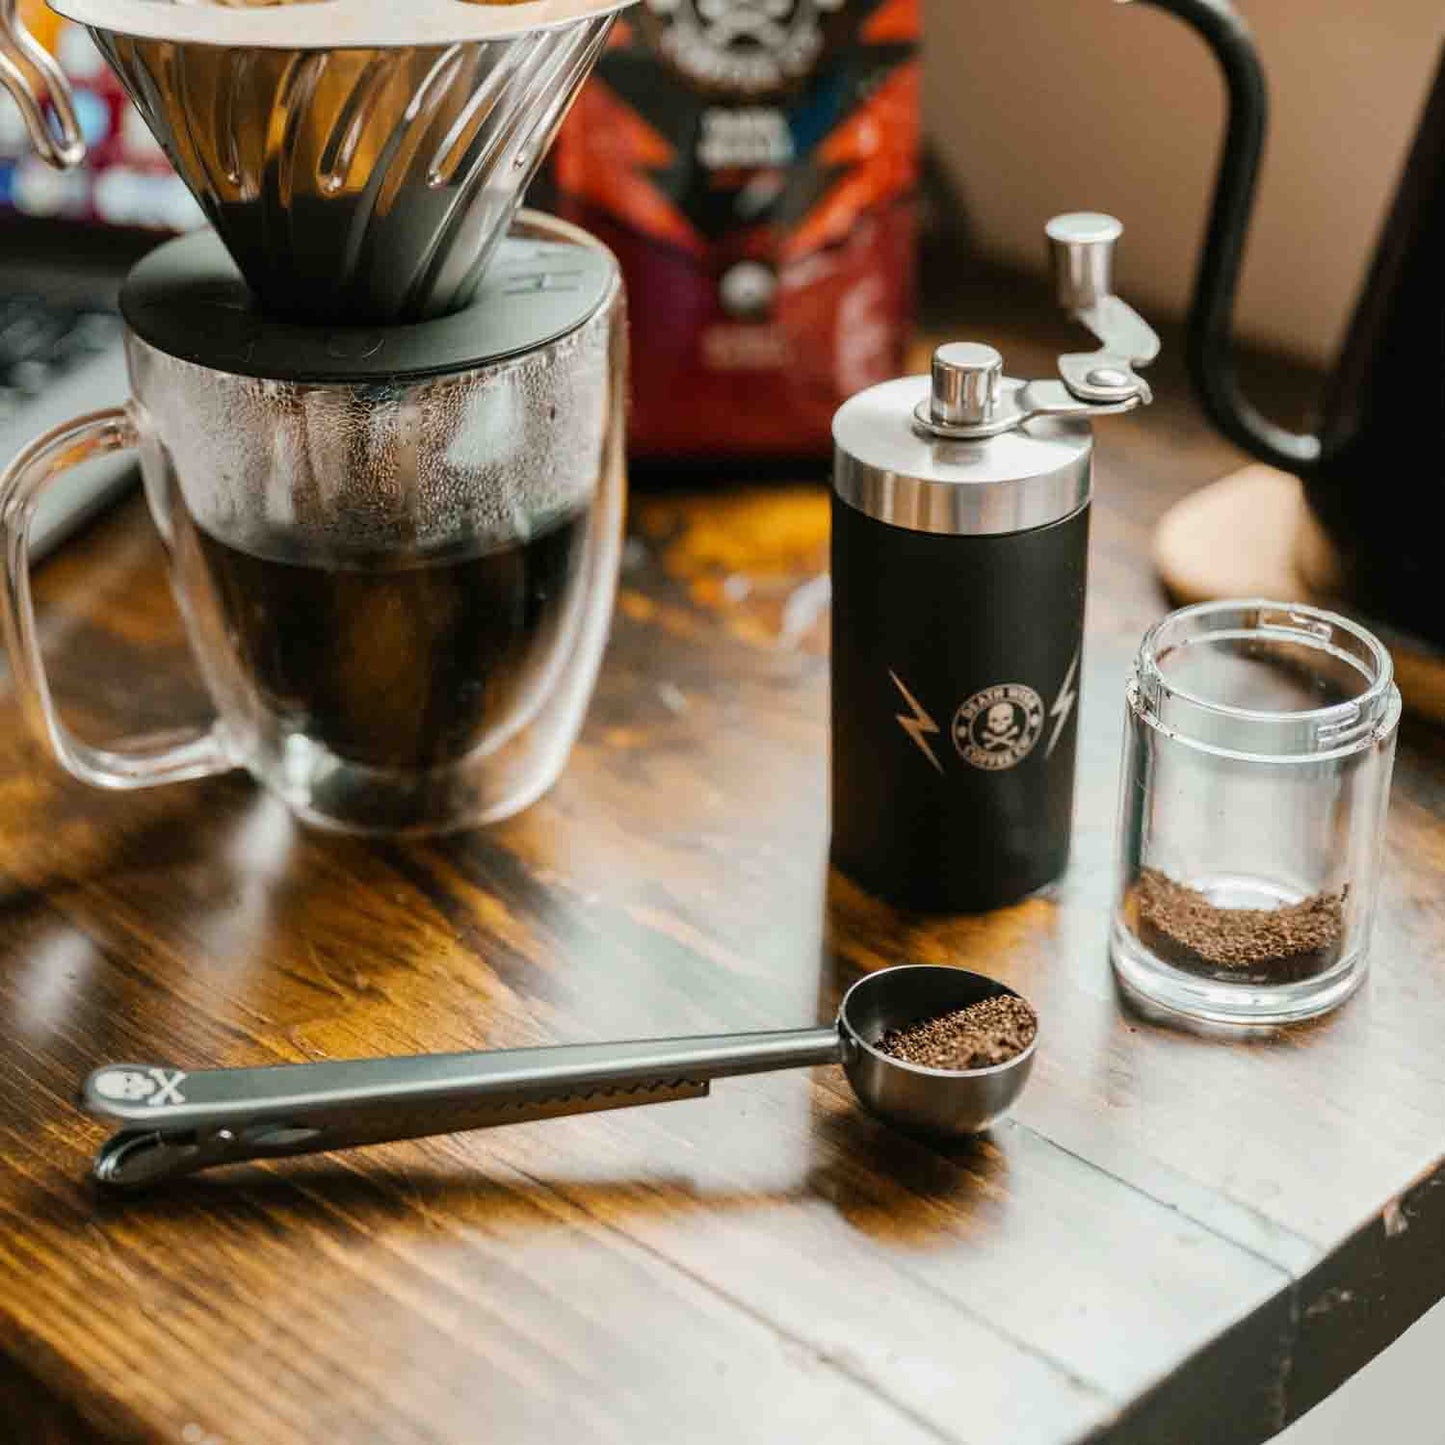 Brewing coffee using the Death Wish Coffee Scoop, Hand Grinder & Hario Coffee Dripper.